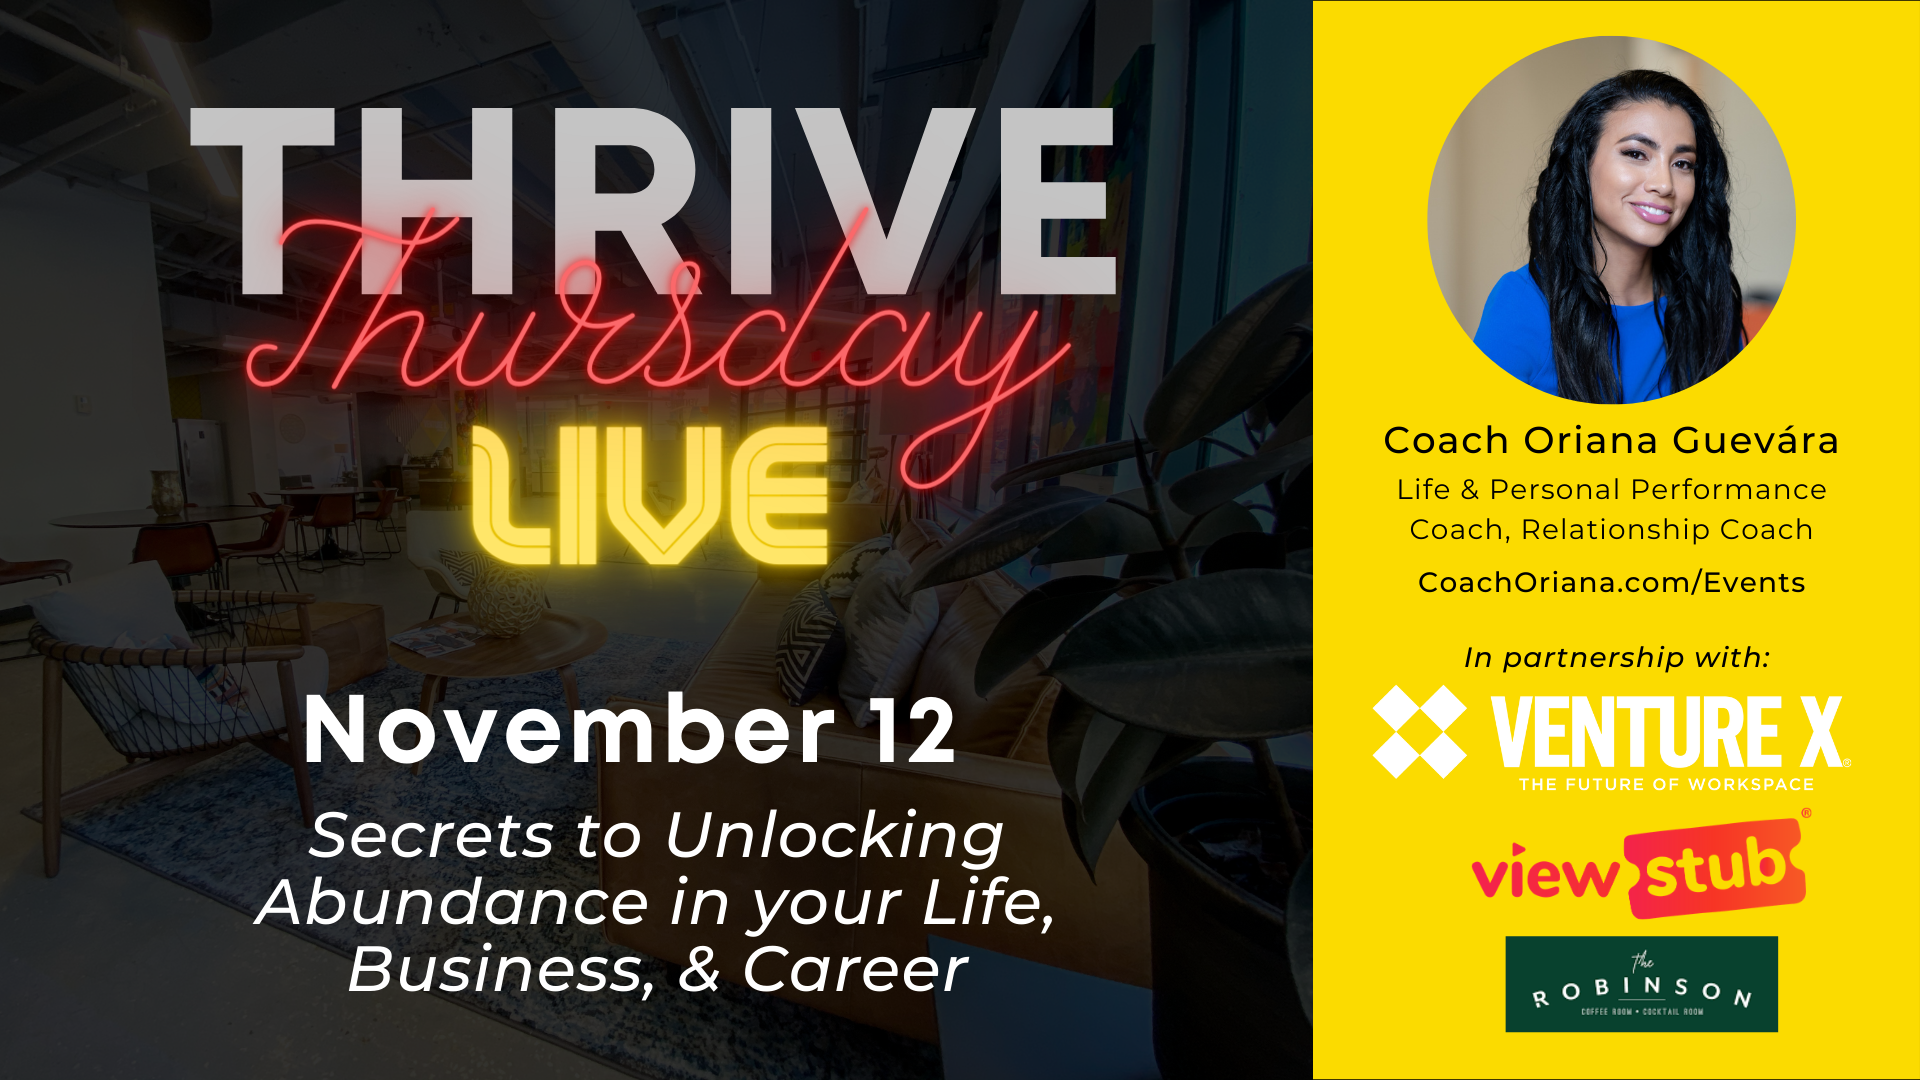 Photo for Thrive Thursday LIVE: Secrets to Unlocking Abundance in Life on ViewStub